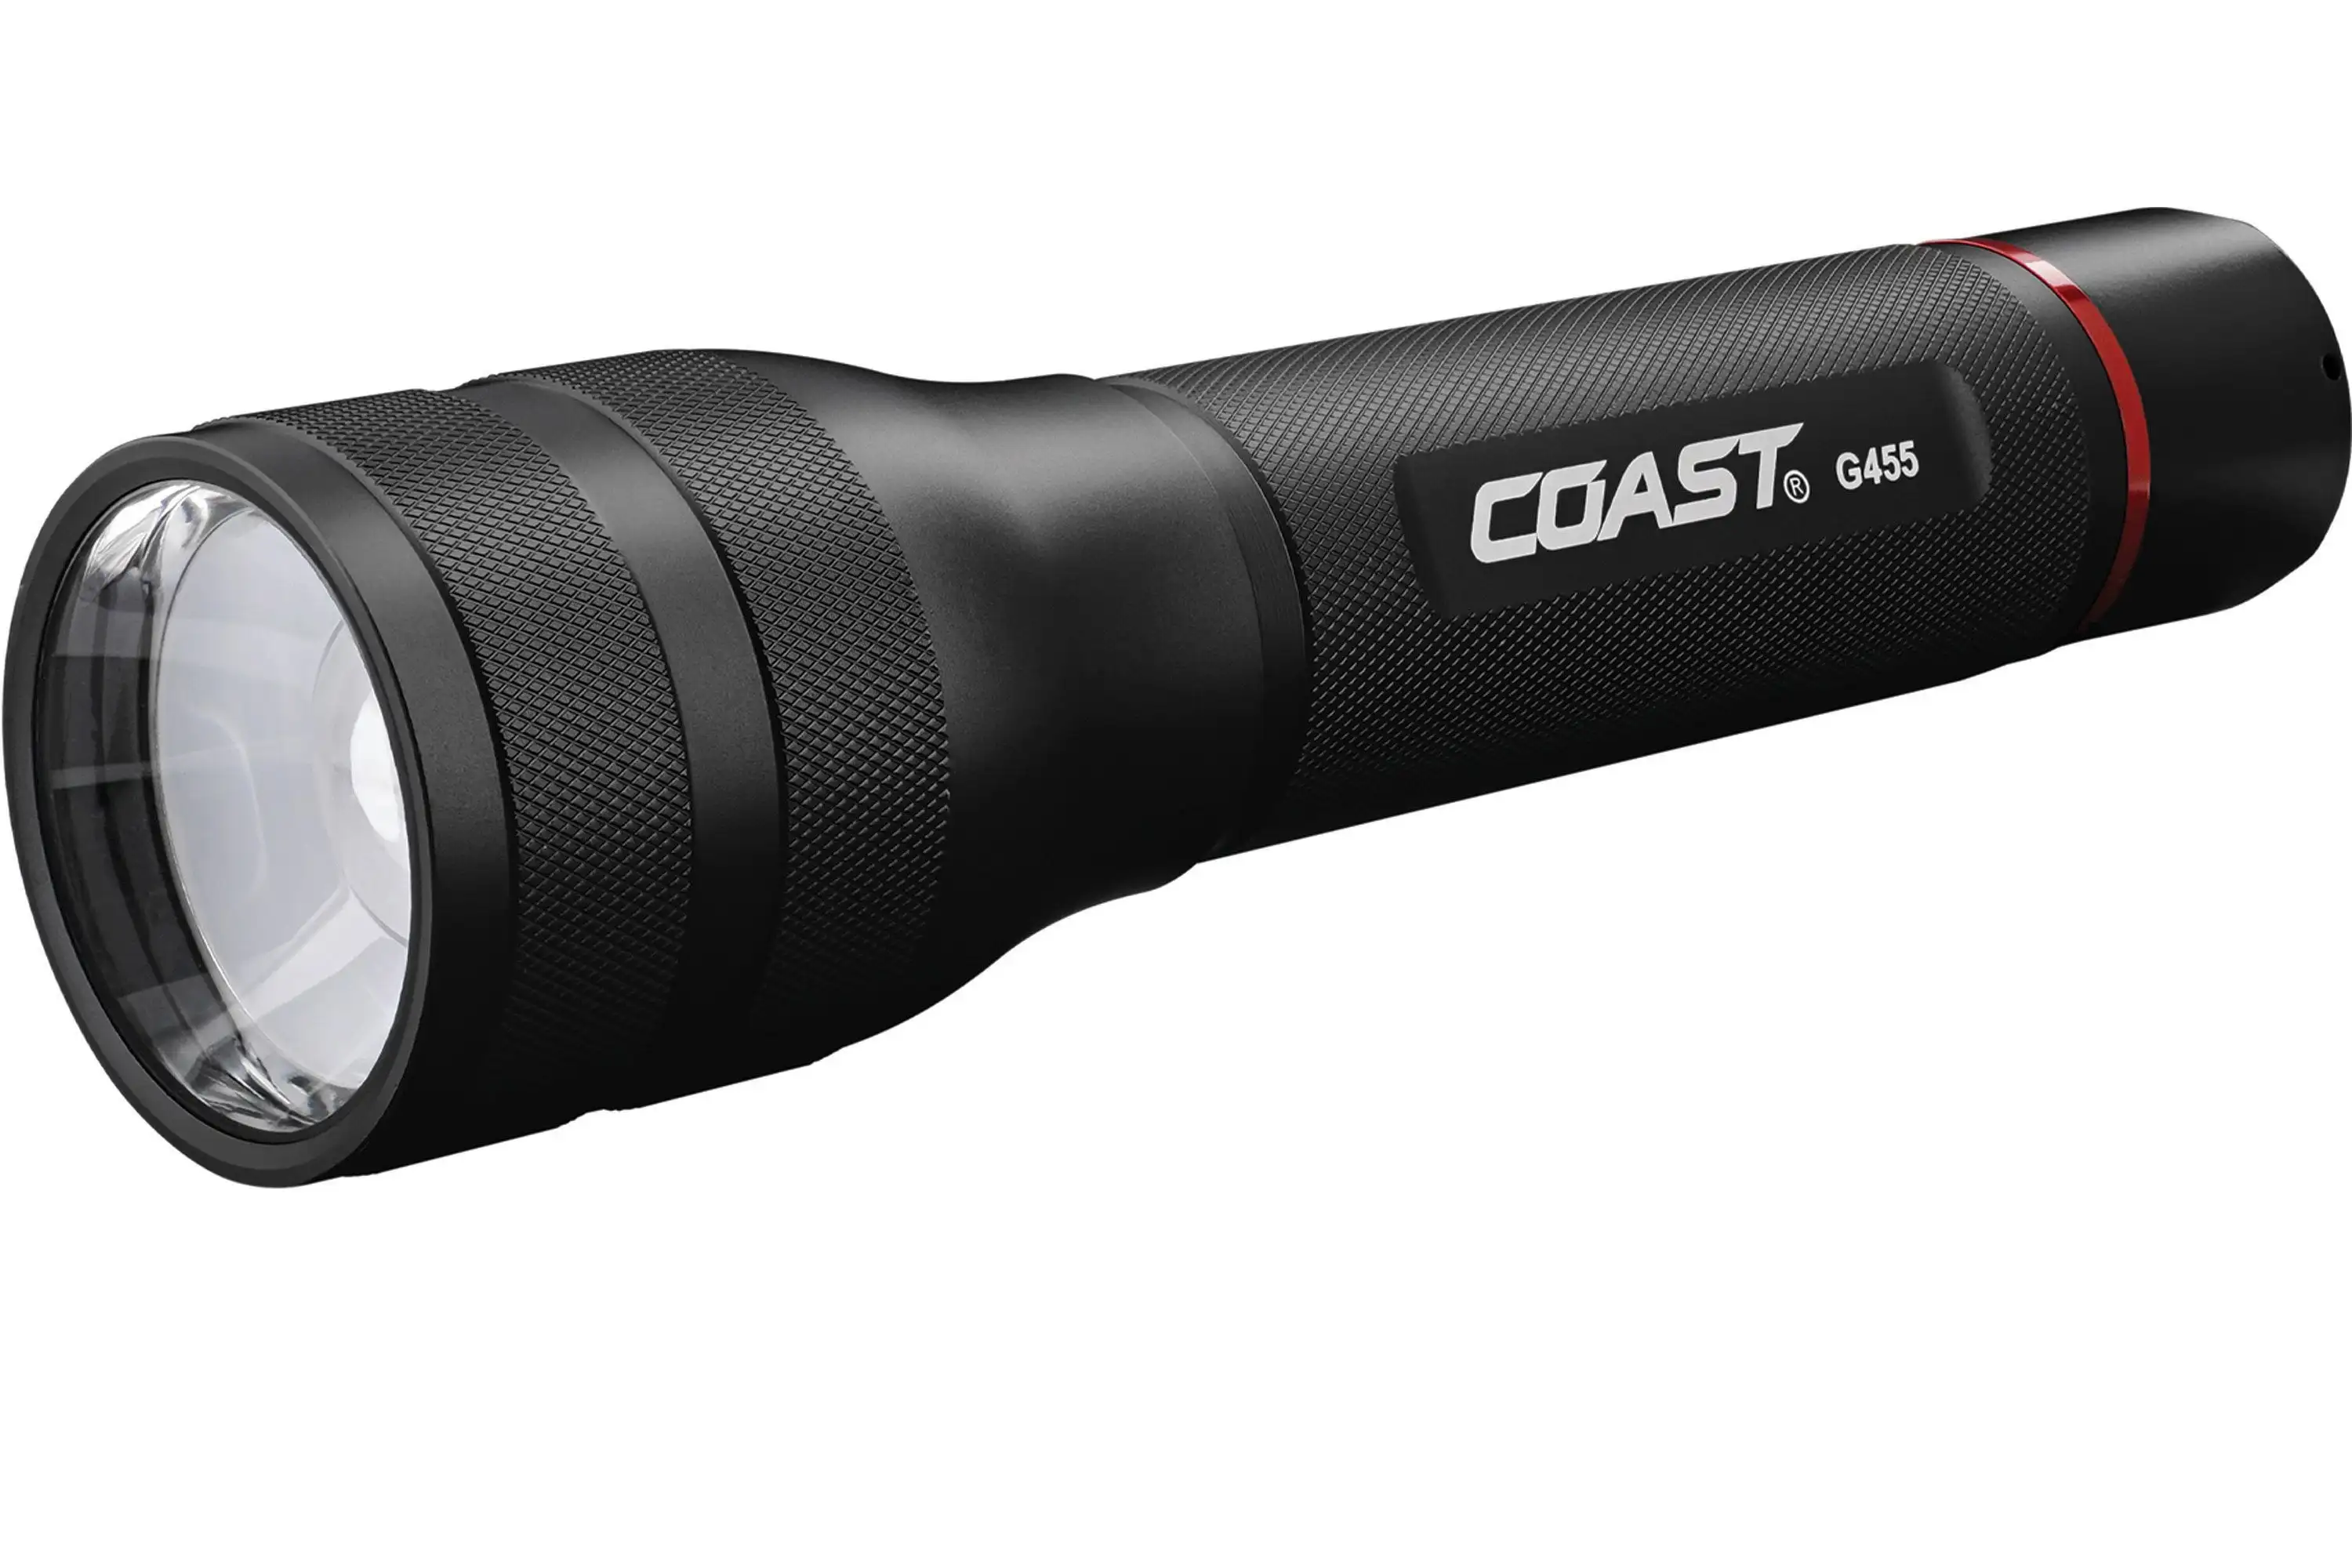 

COAST G455 1630 Lumen Twist Focus LED Flashlight, 6 x AA Batteries Included, 21 oz.